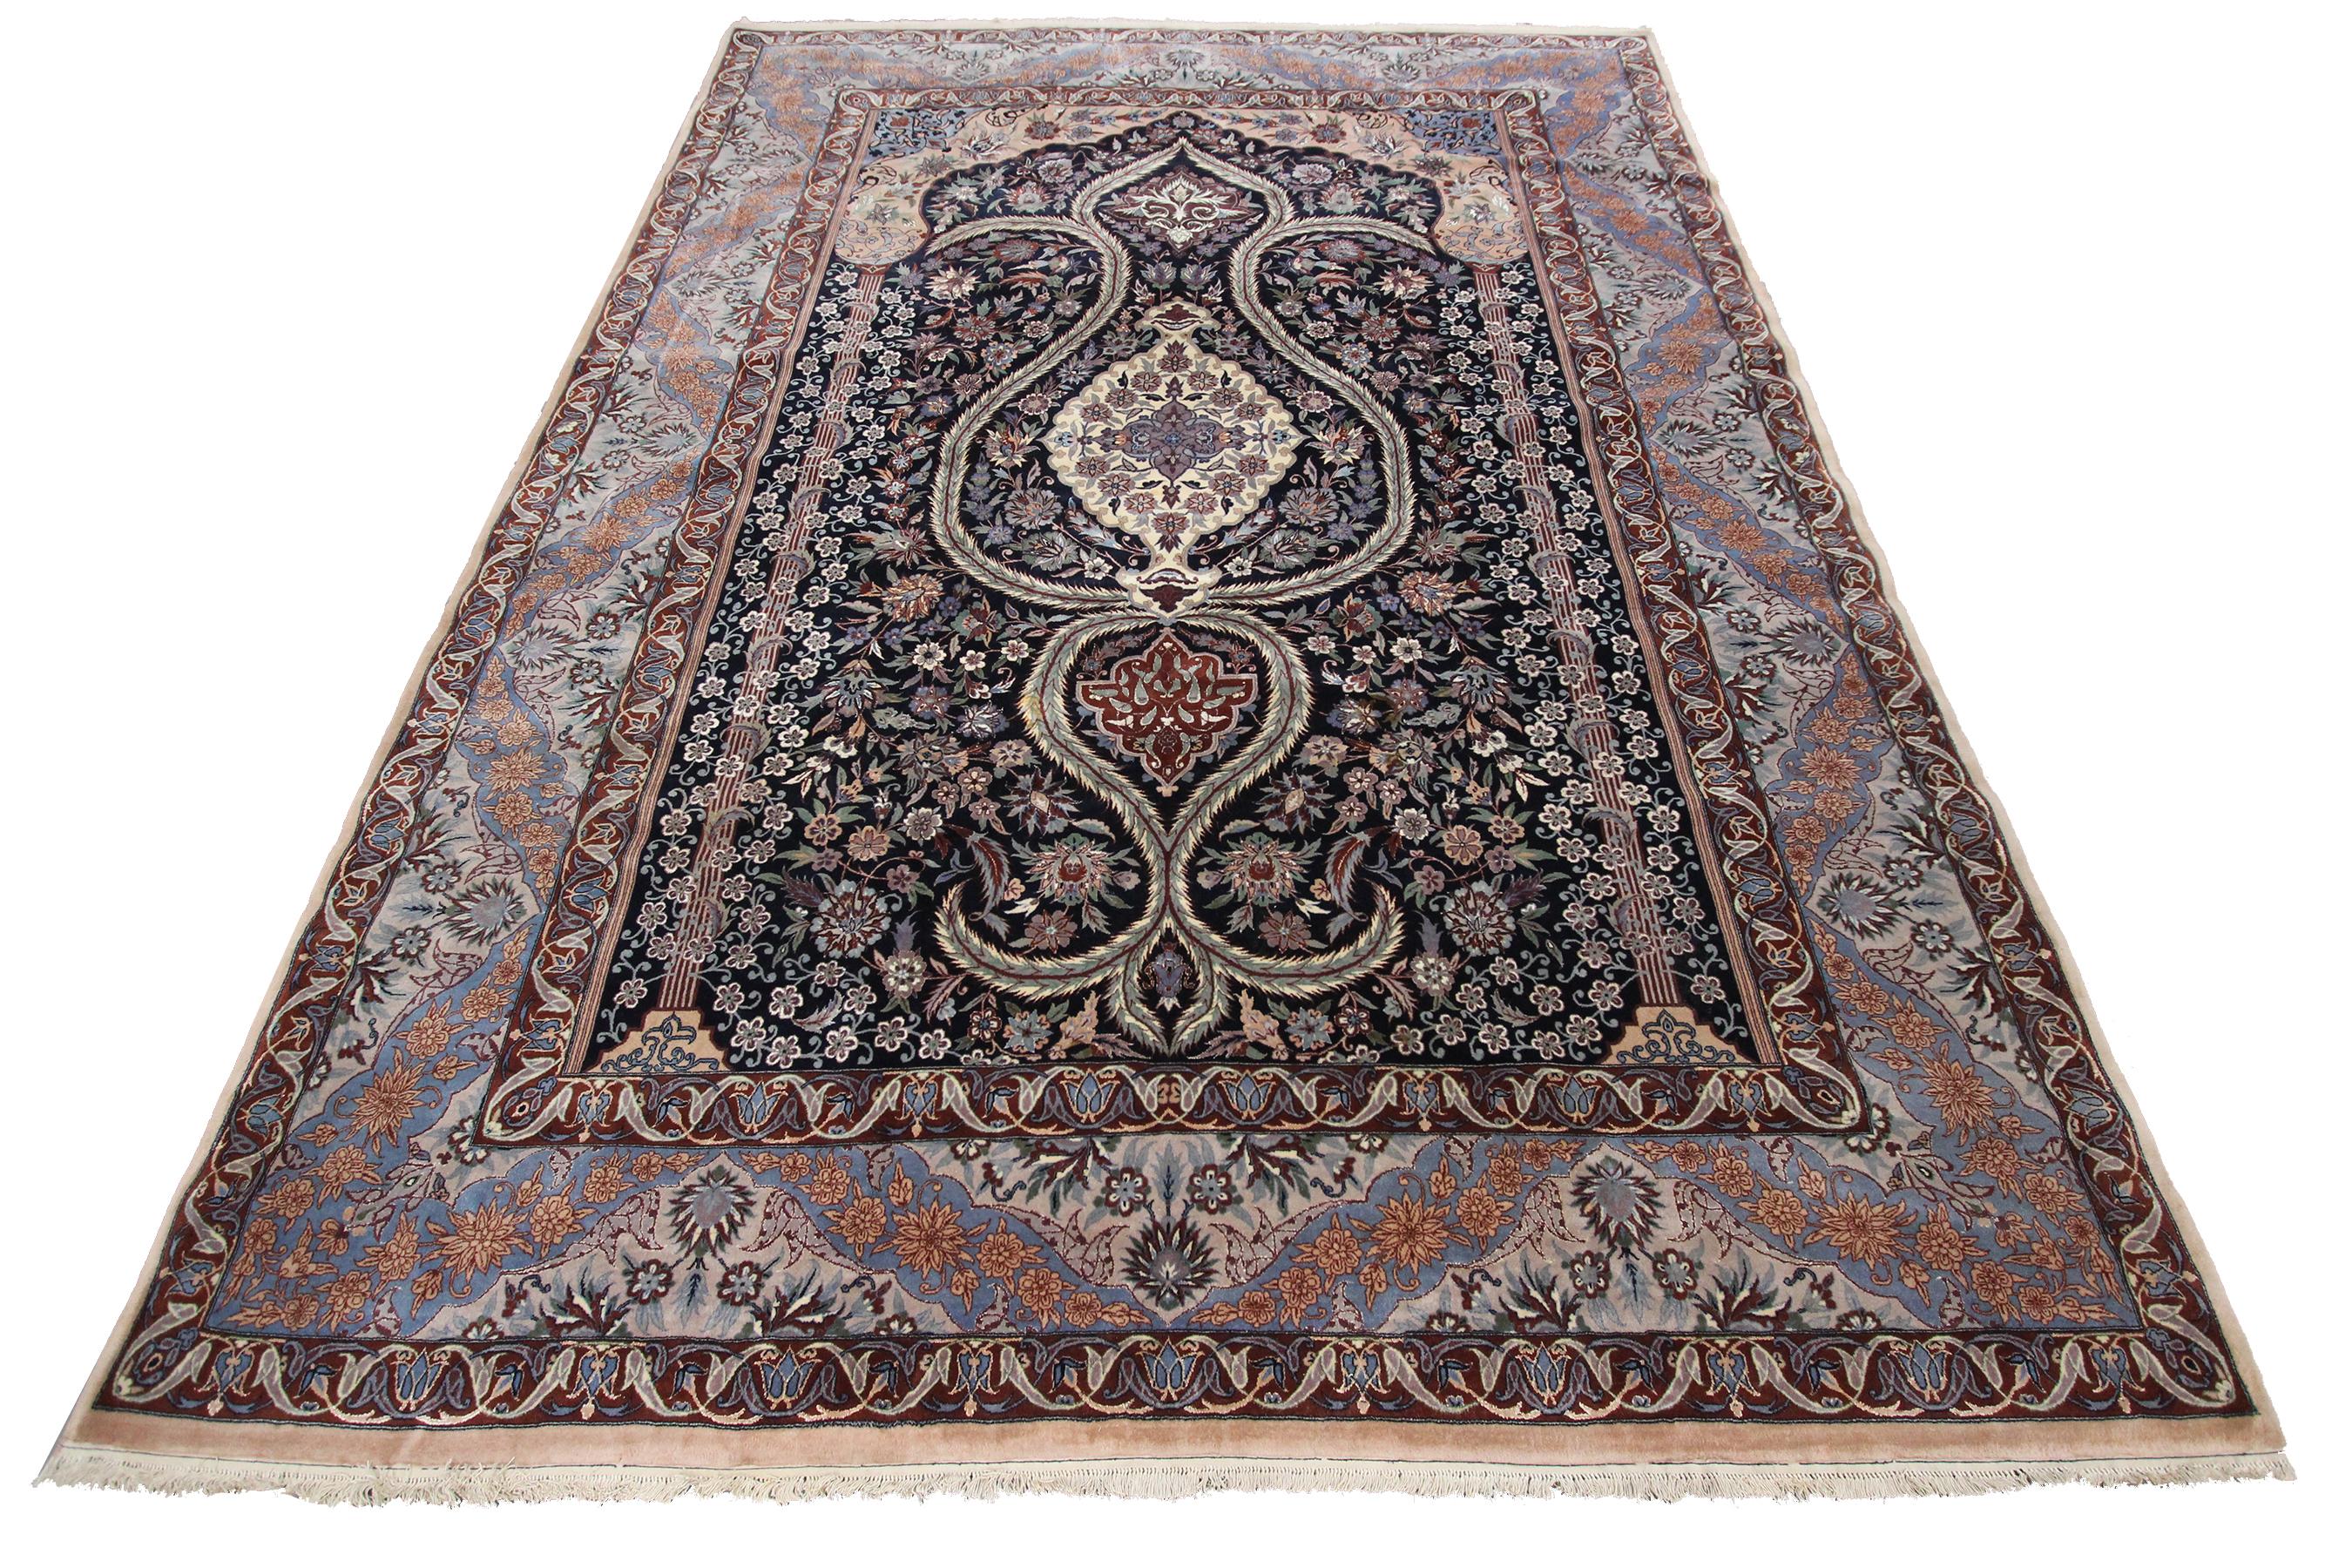 Exceptionally Fine Wool & Silk Esfahan rug Isfahan Silk Foundation Rug
8x11 244cm x 335

